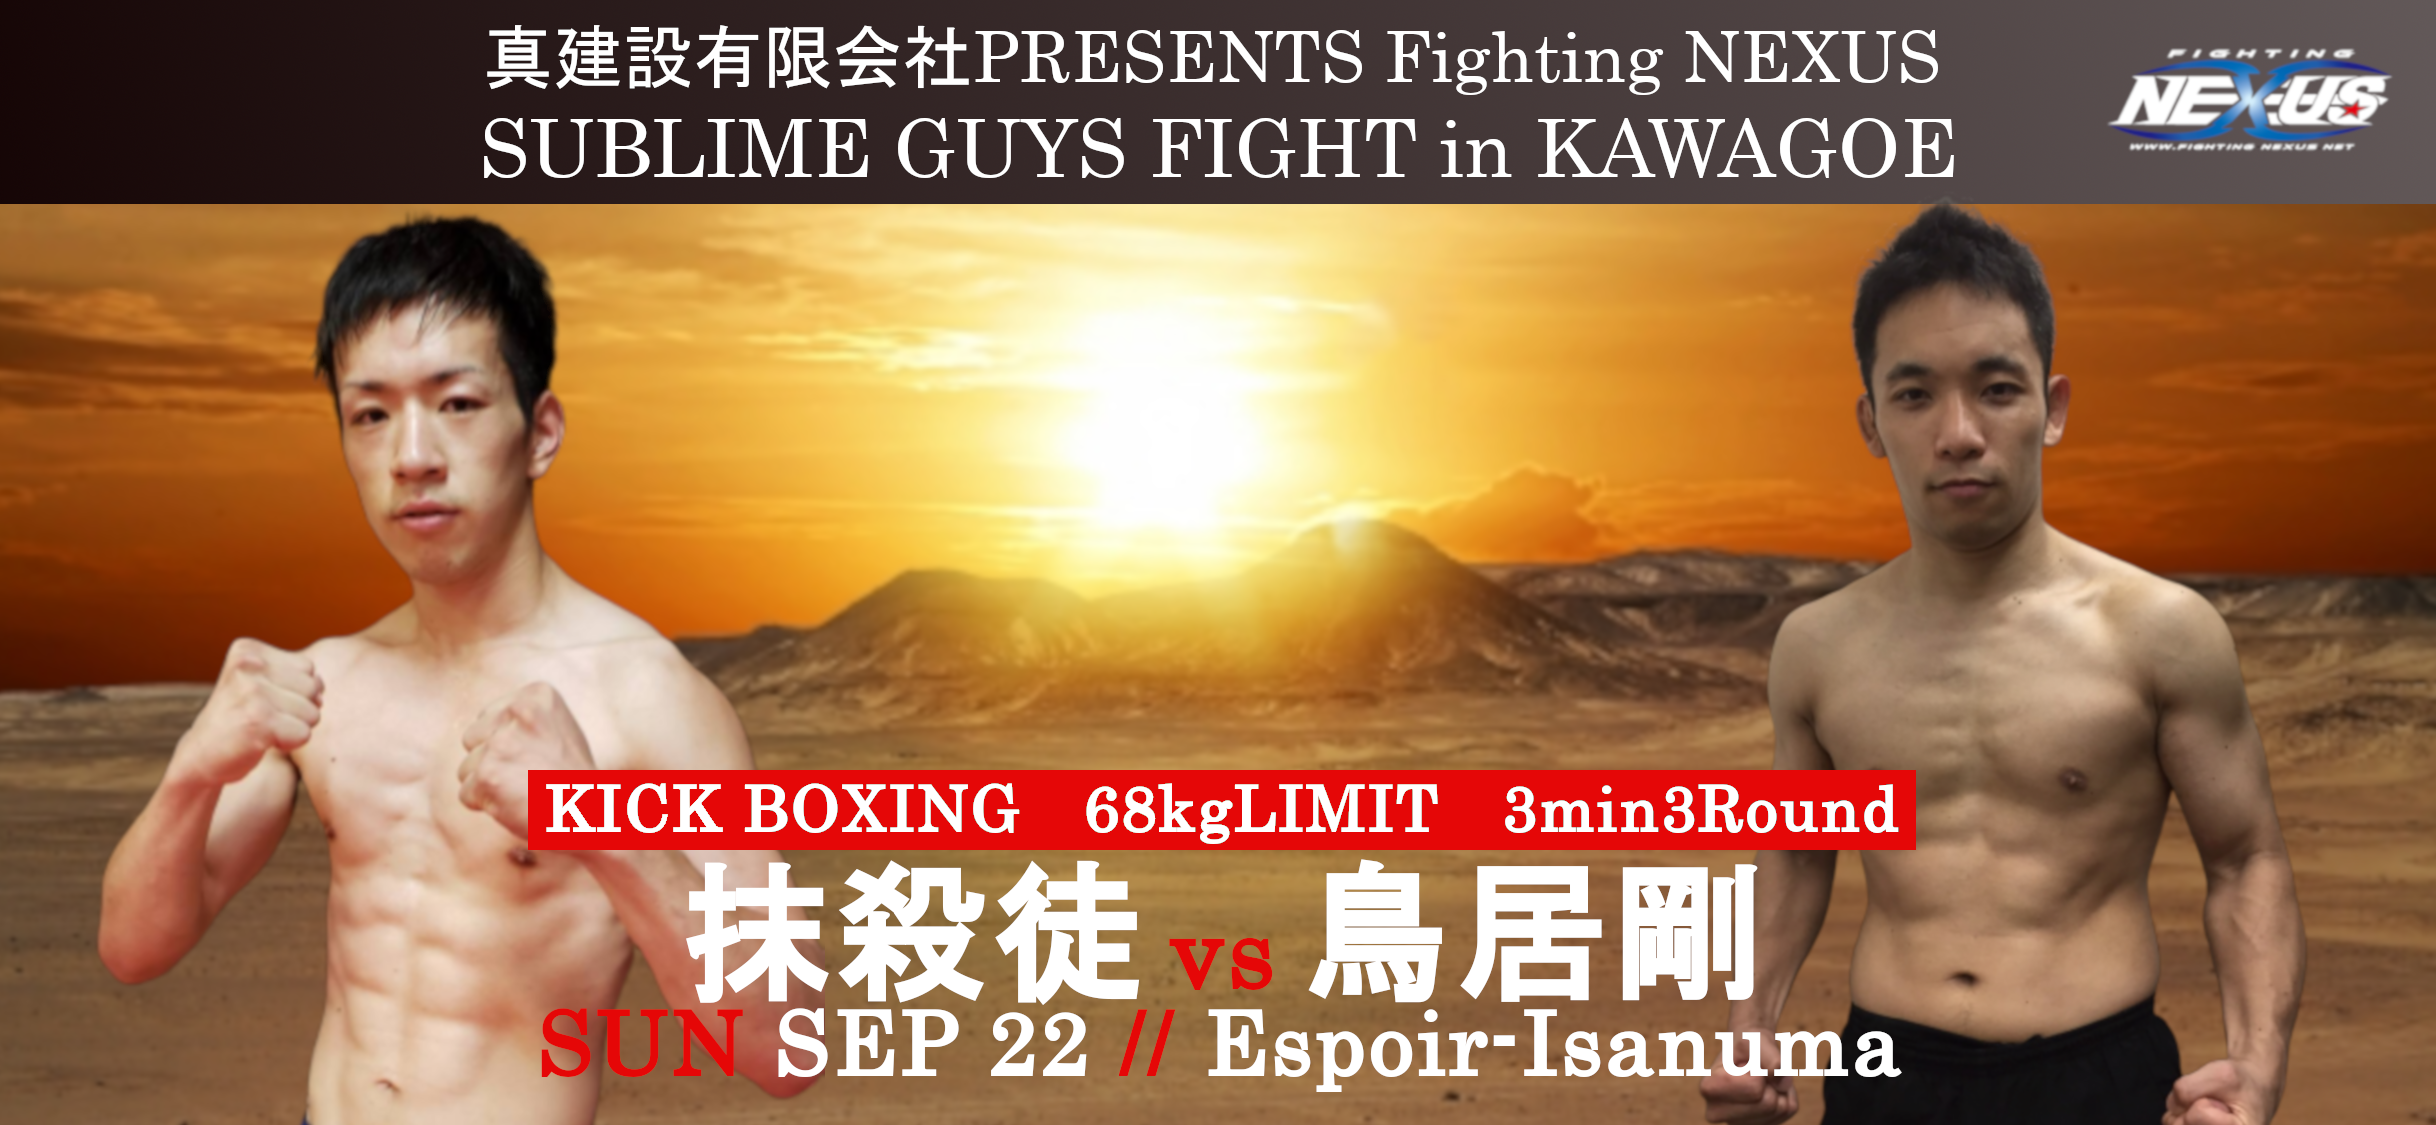 Fighting NEXUS “SUBLIME GUYS FIGHT” 2019.09.22(Sun) in espoir ISANUMA